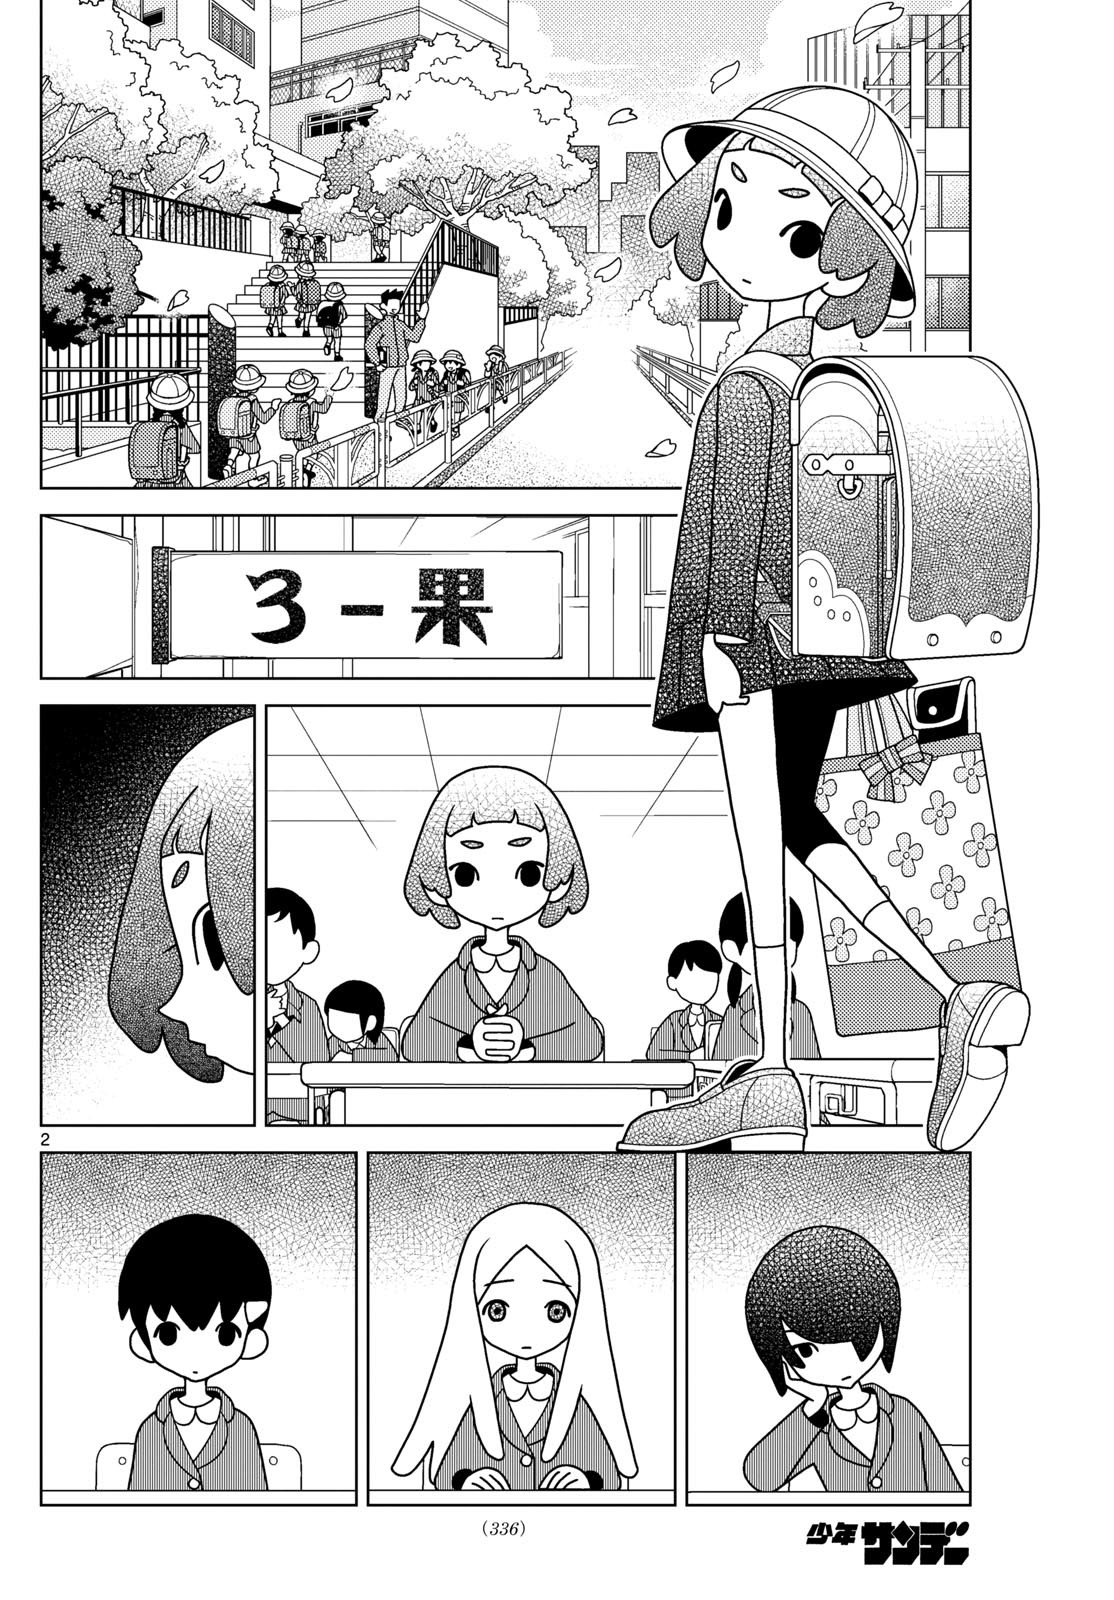 Shibuya Near Family - Chapter 091 - Page 2